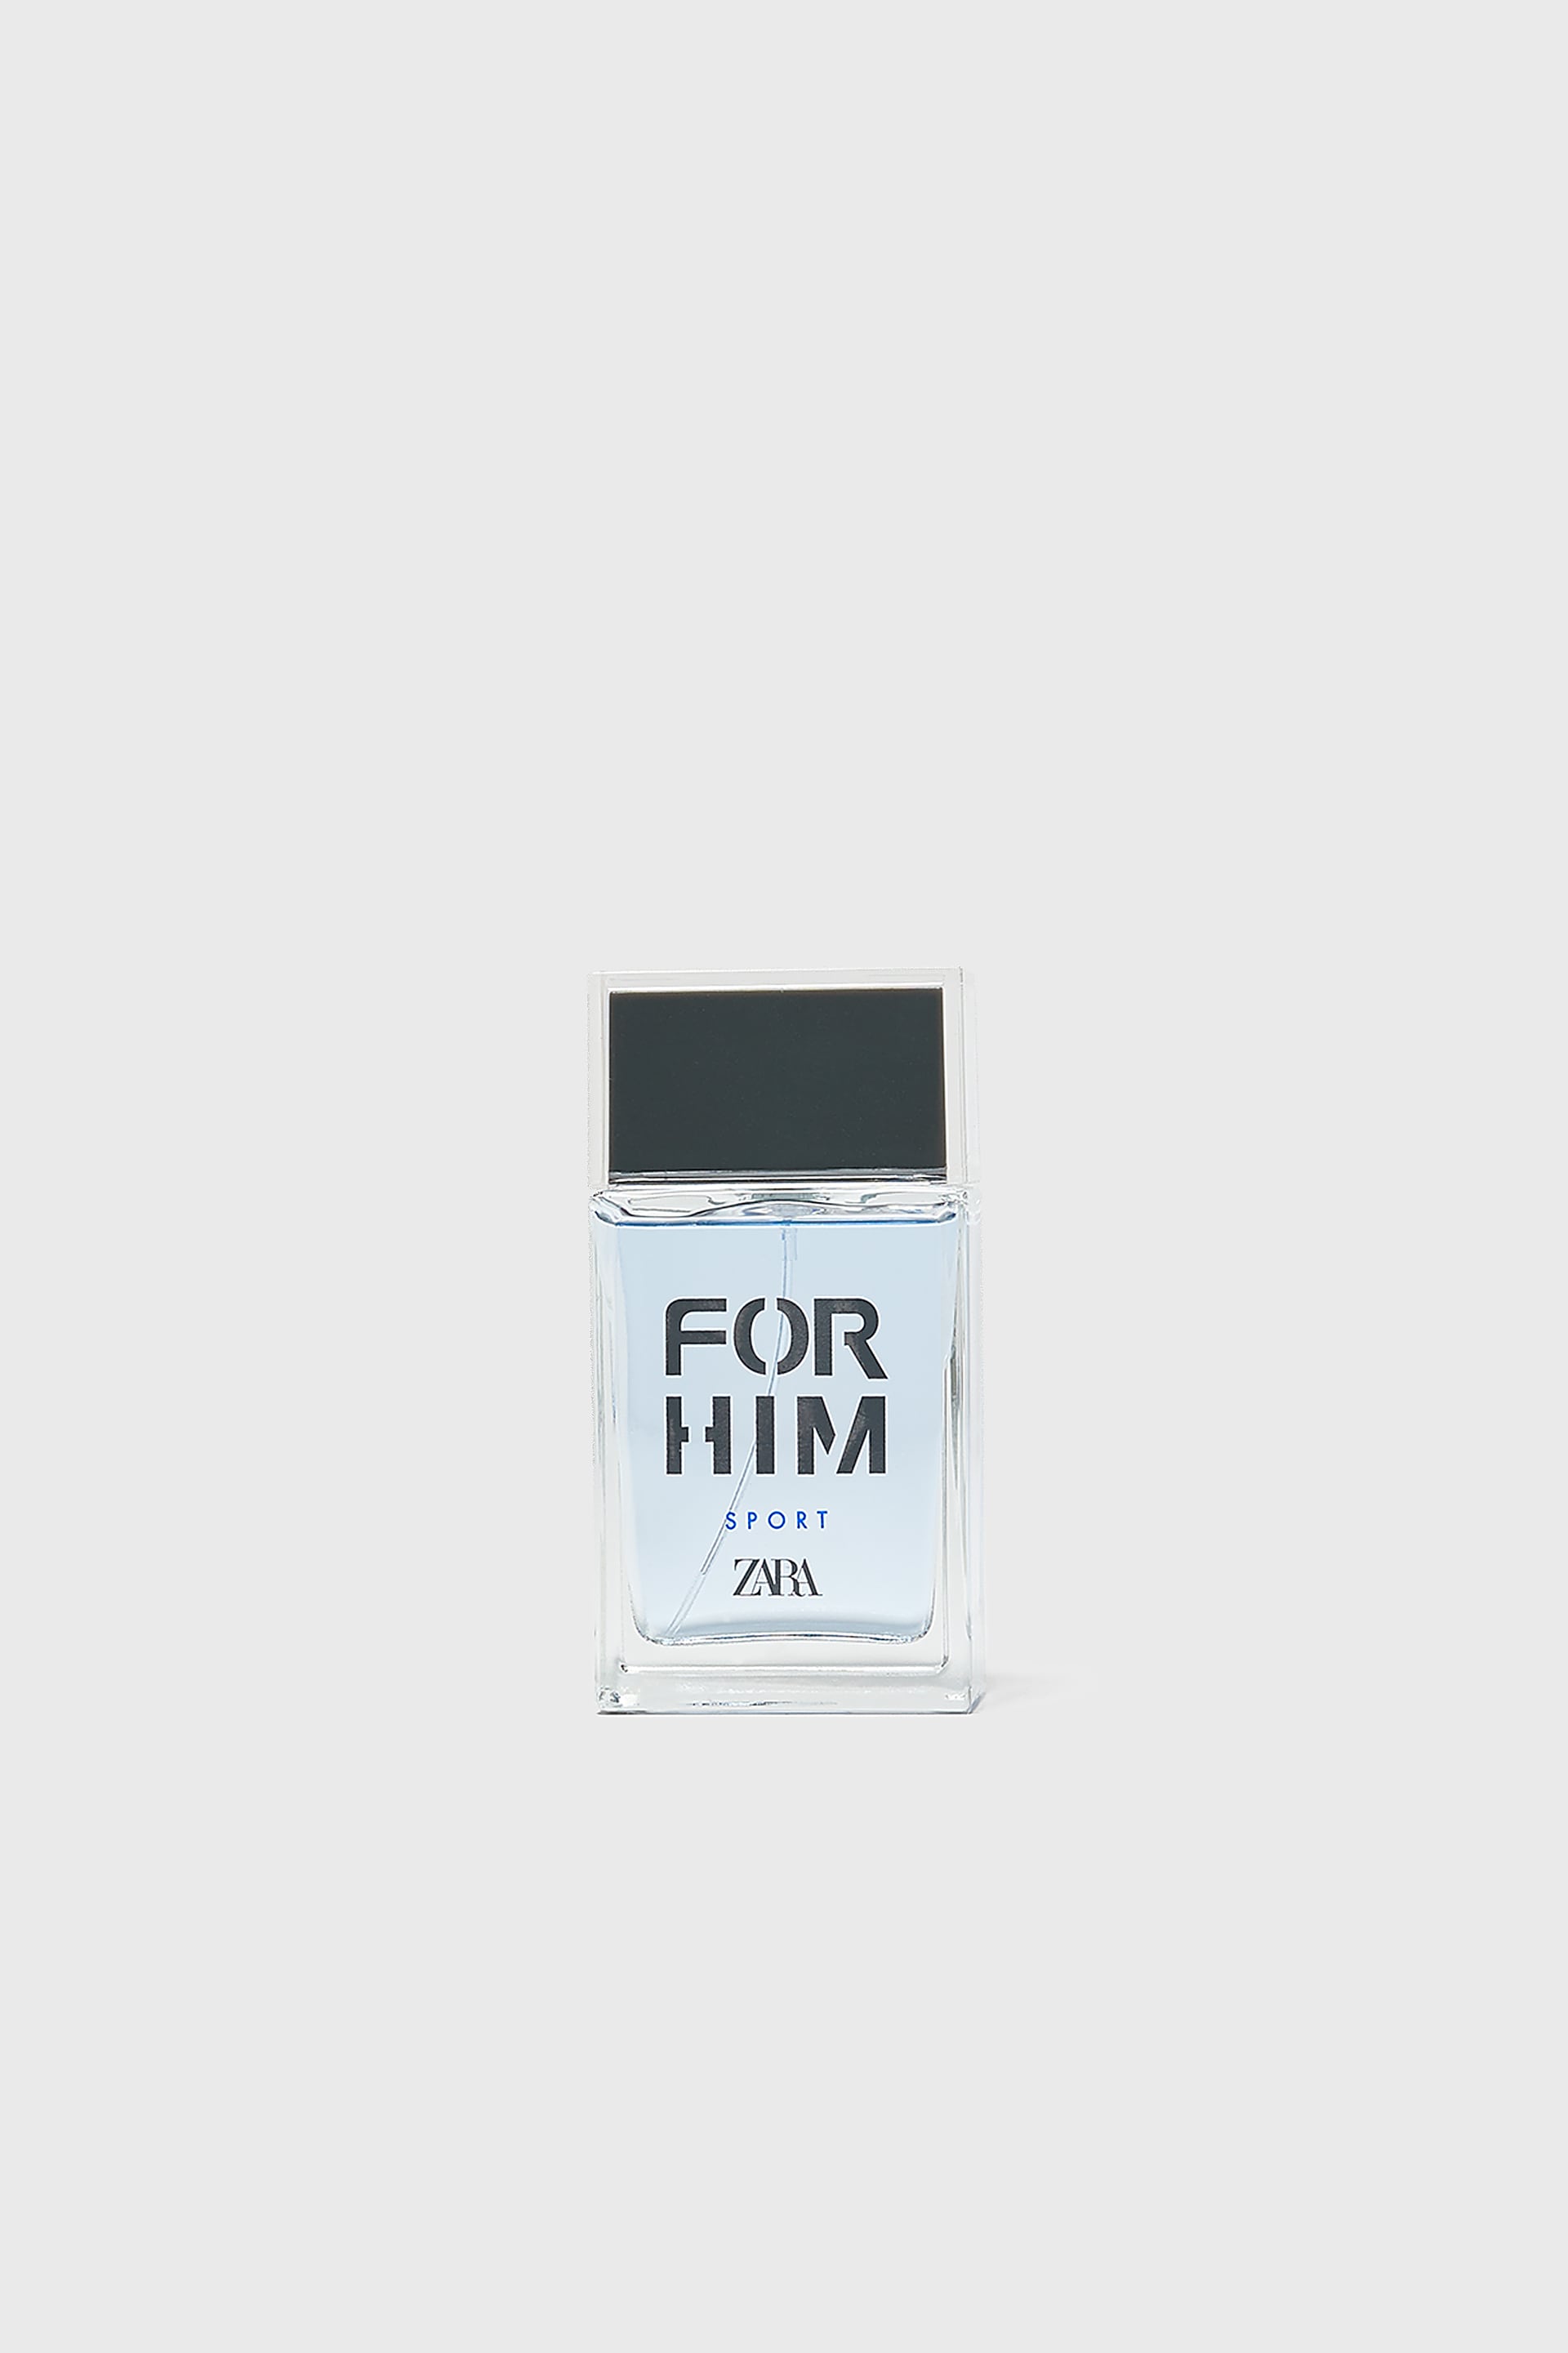 For Him Silver Sport Zara cologne - a new fragrance for men 2019